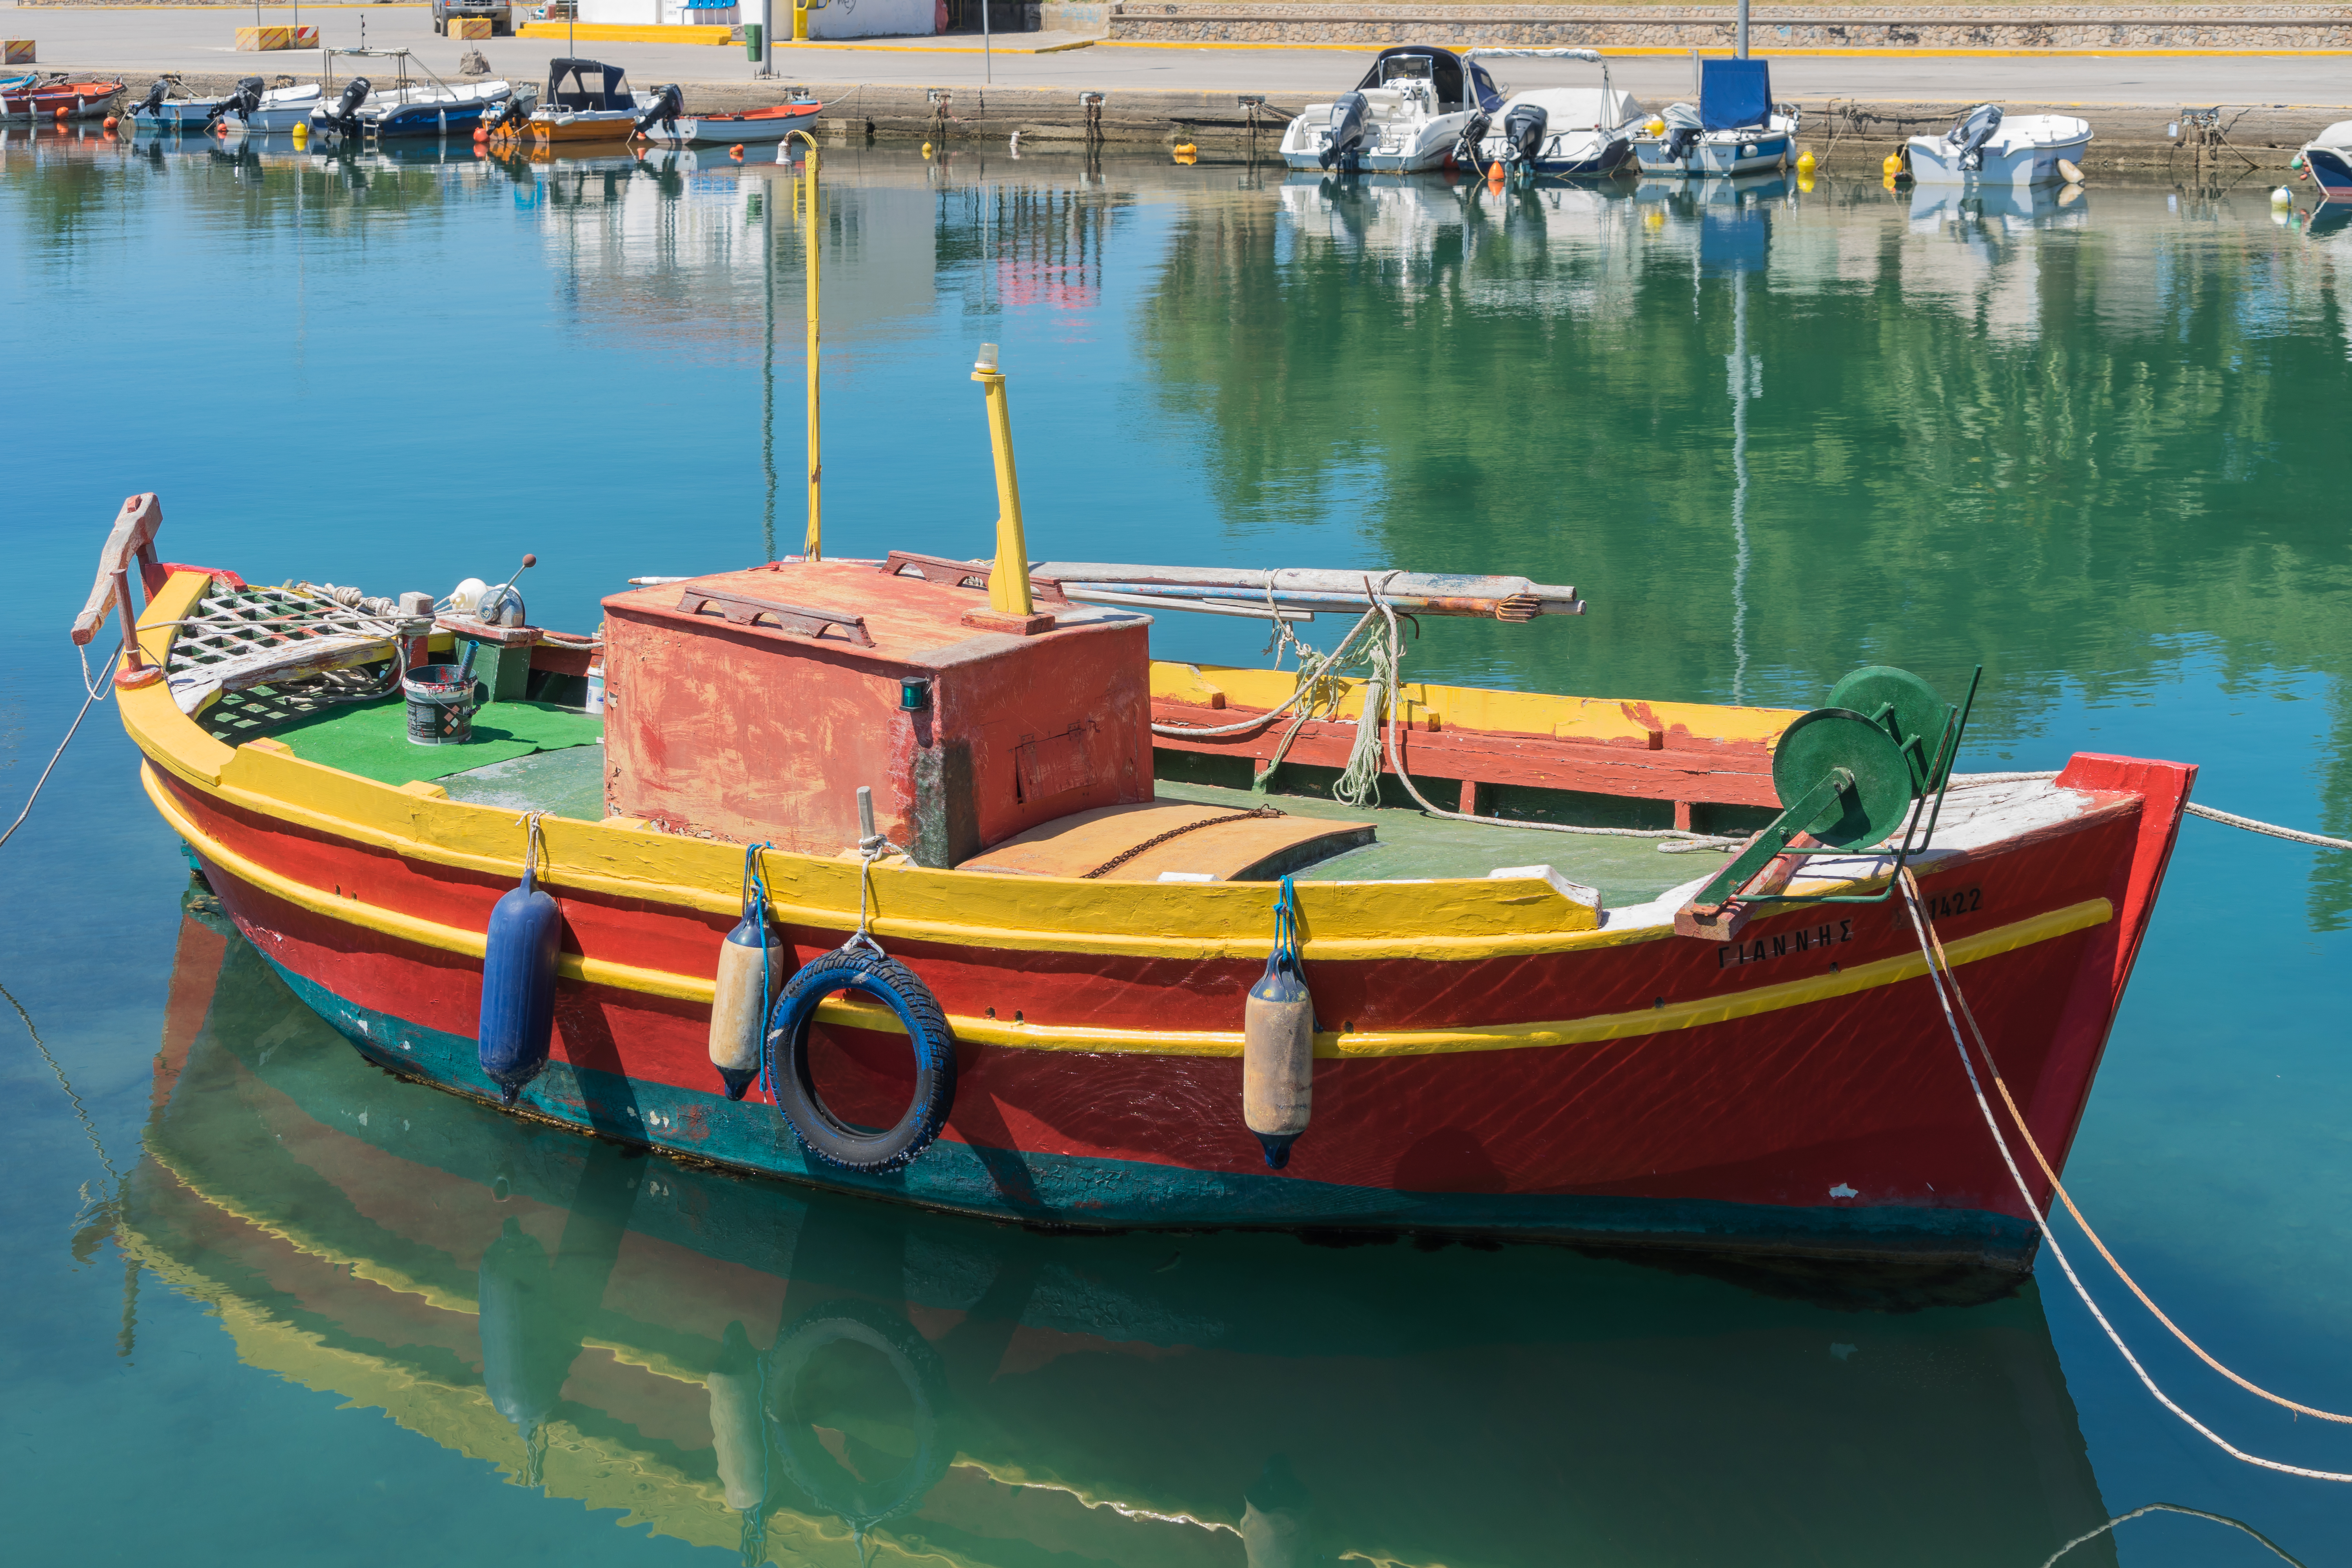 File:Colorful boat Nea Artaki Euboea Greece.jpg - Wikimedia Commons